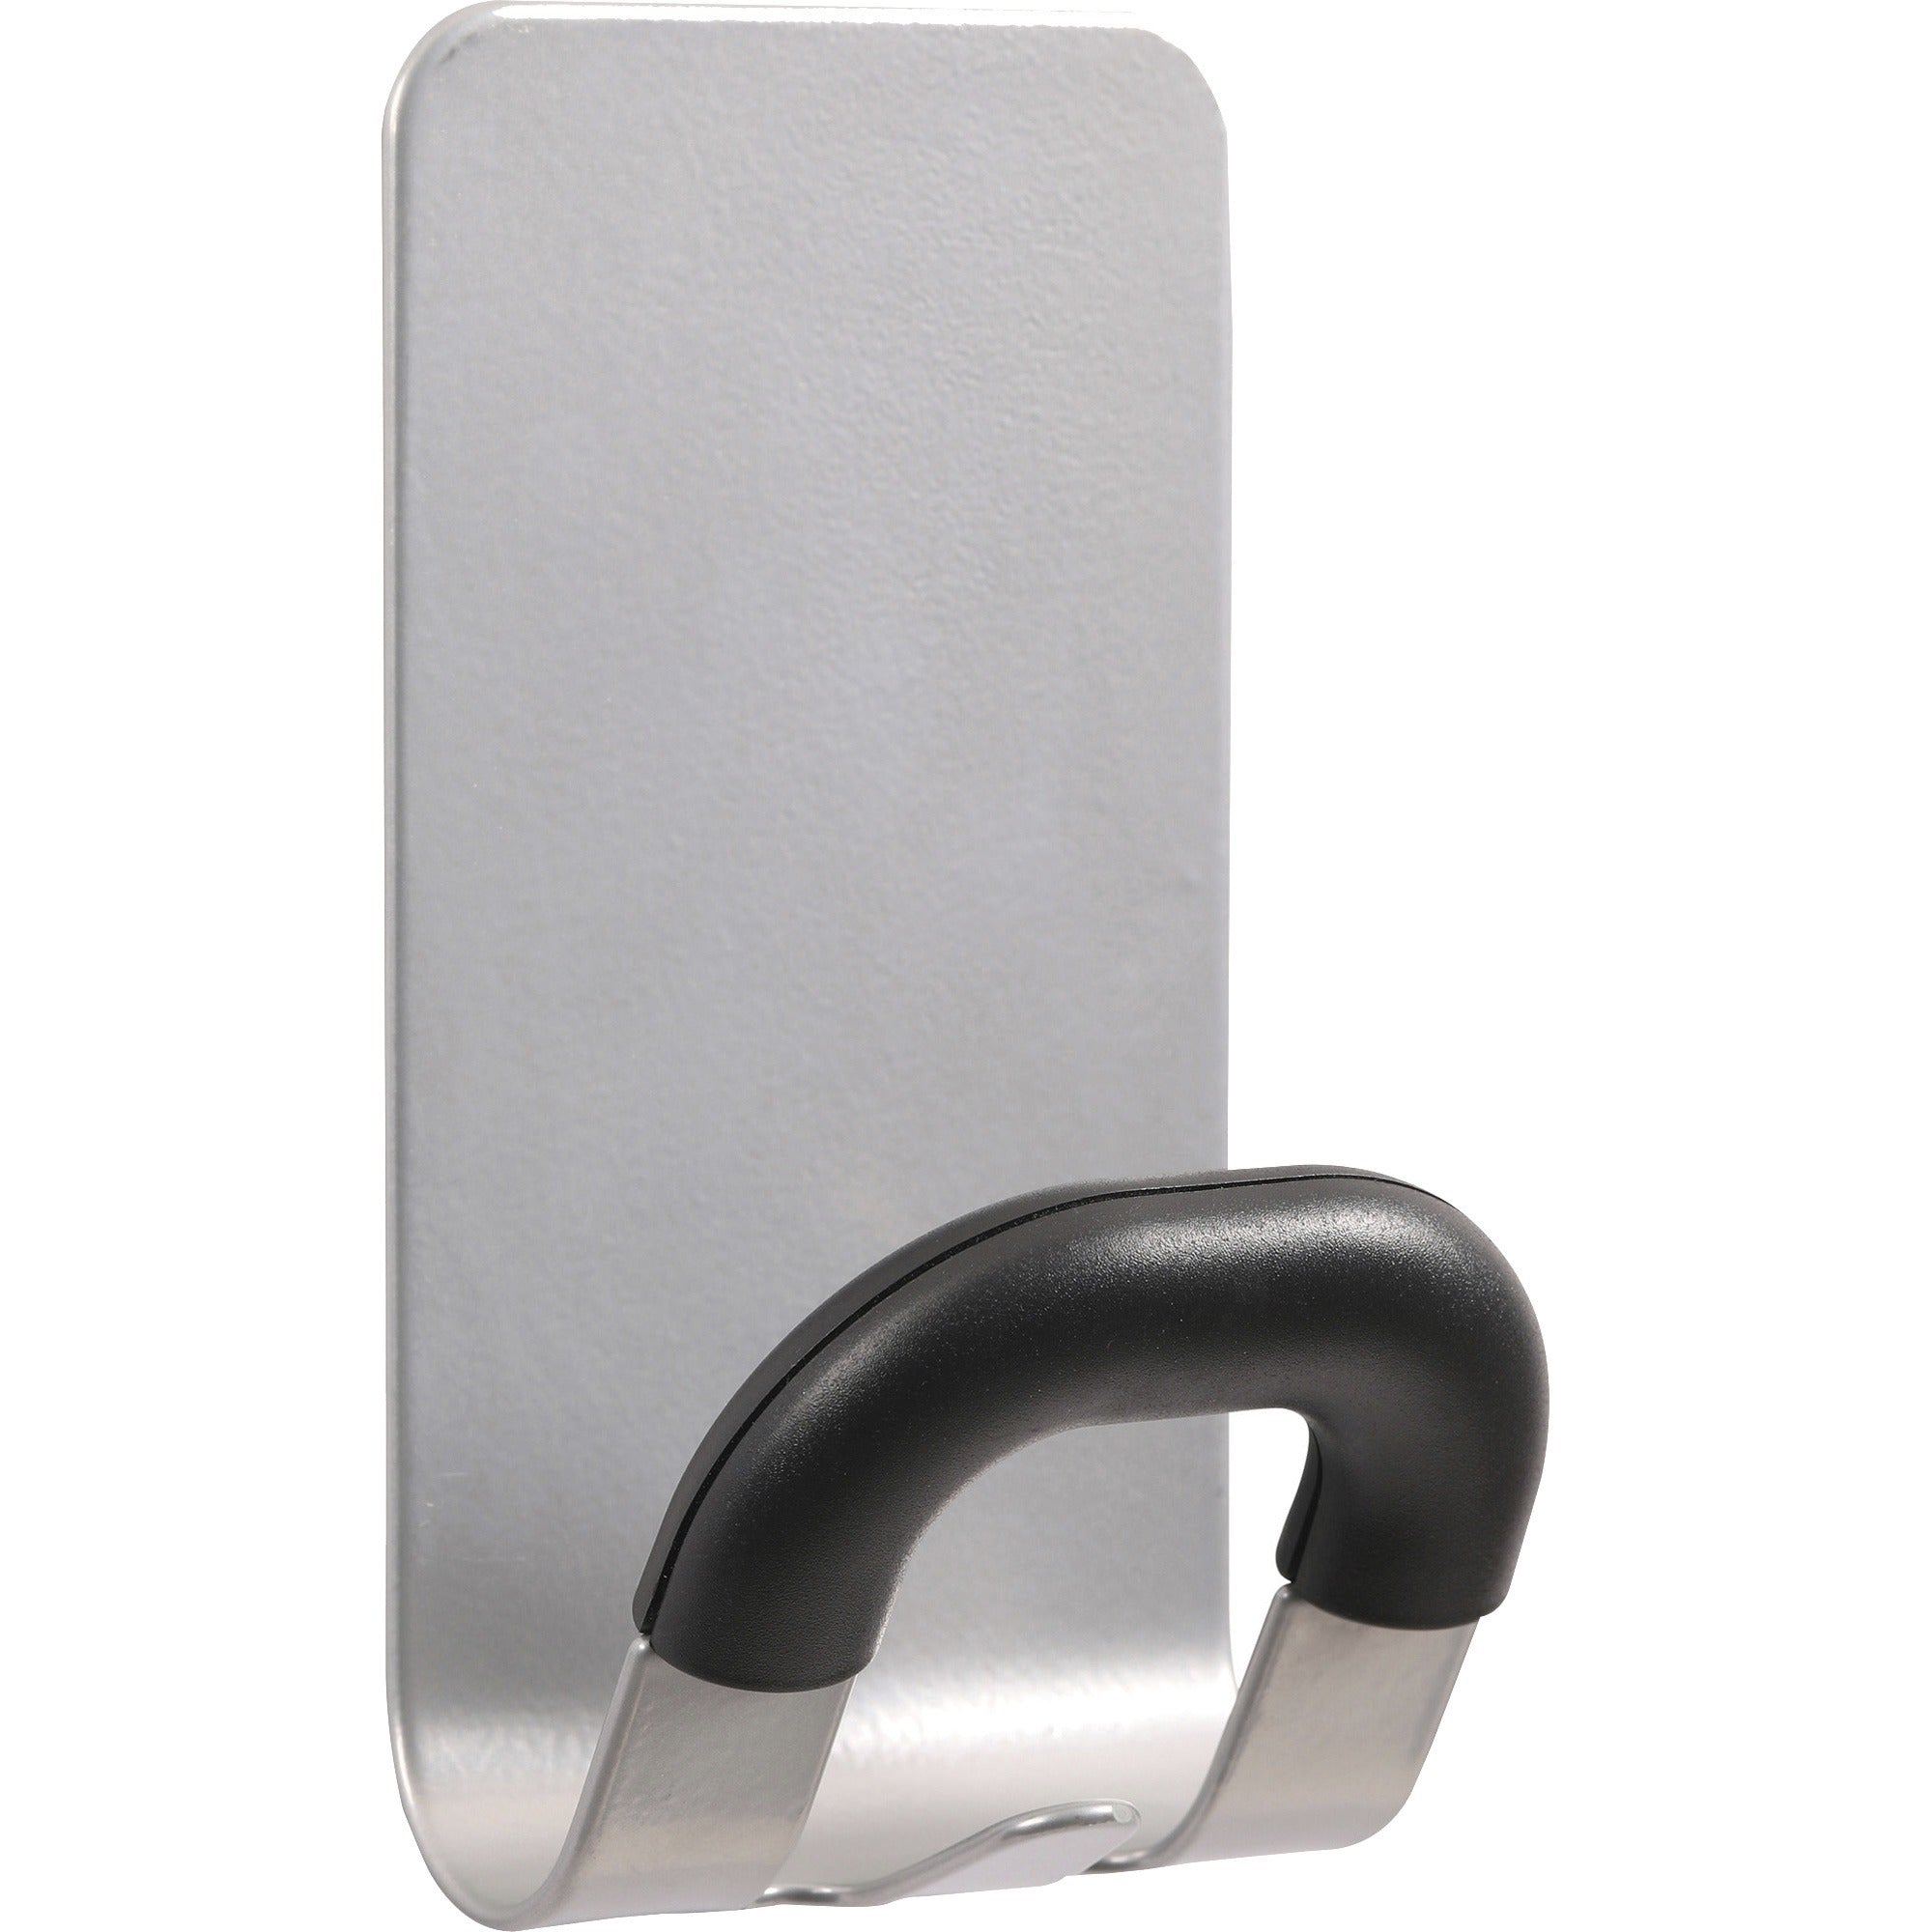 alba-magnetic-coat-hook-1102-lb-5-kg-capacity-for-coat-metal-cabinet-door-clothes-umbrella-key-accessories-acrylonitrile-butadiene-styrene-abs-gray-24-carton_abapmmag2mct - 1